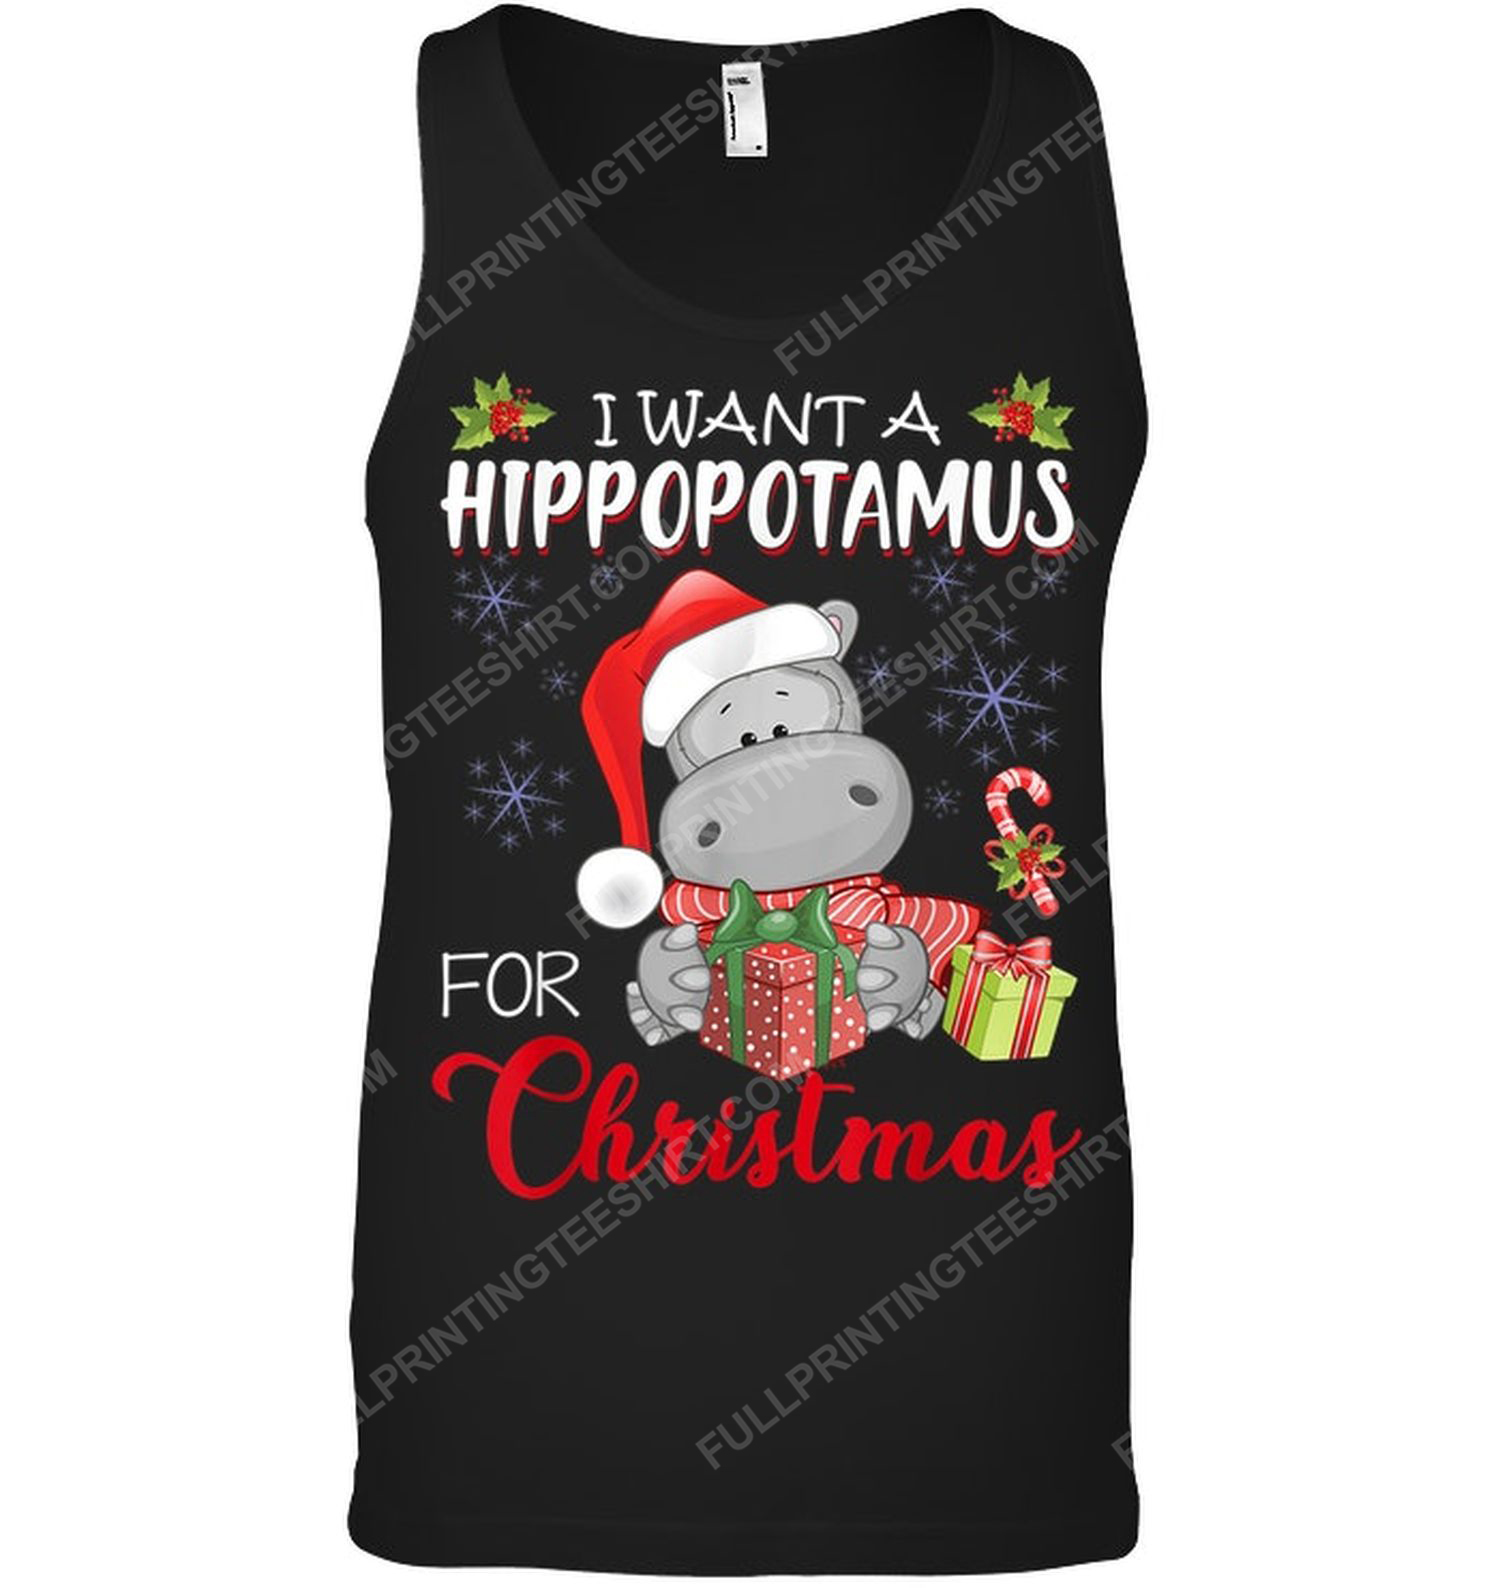 I want a hippopotamus for christmas tank top